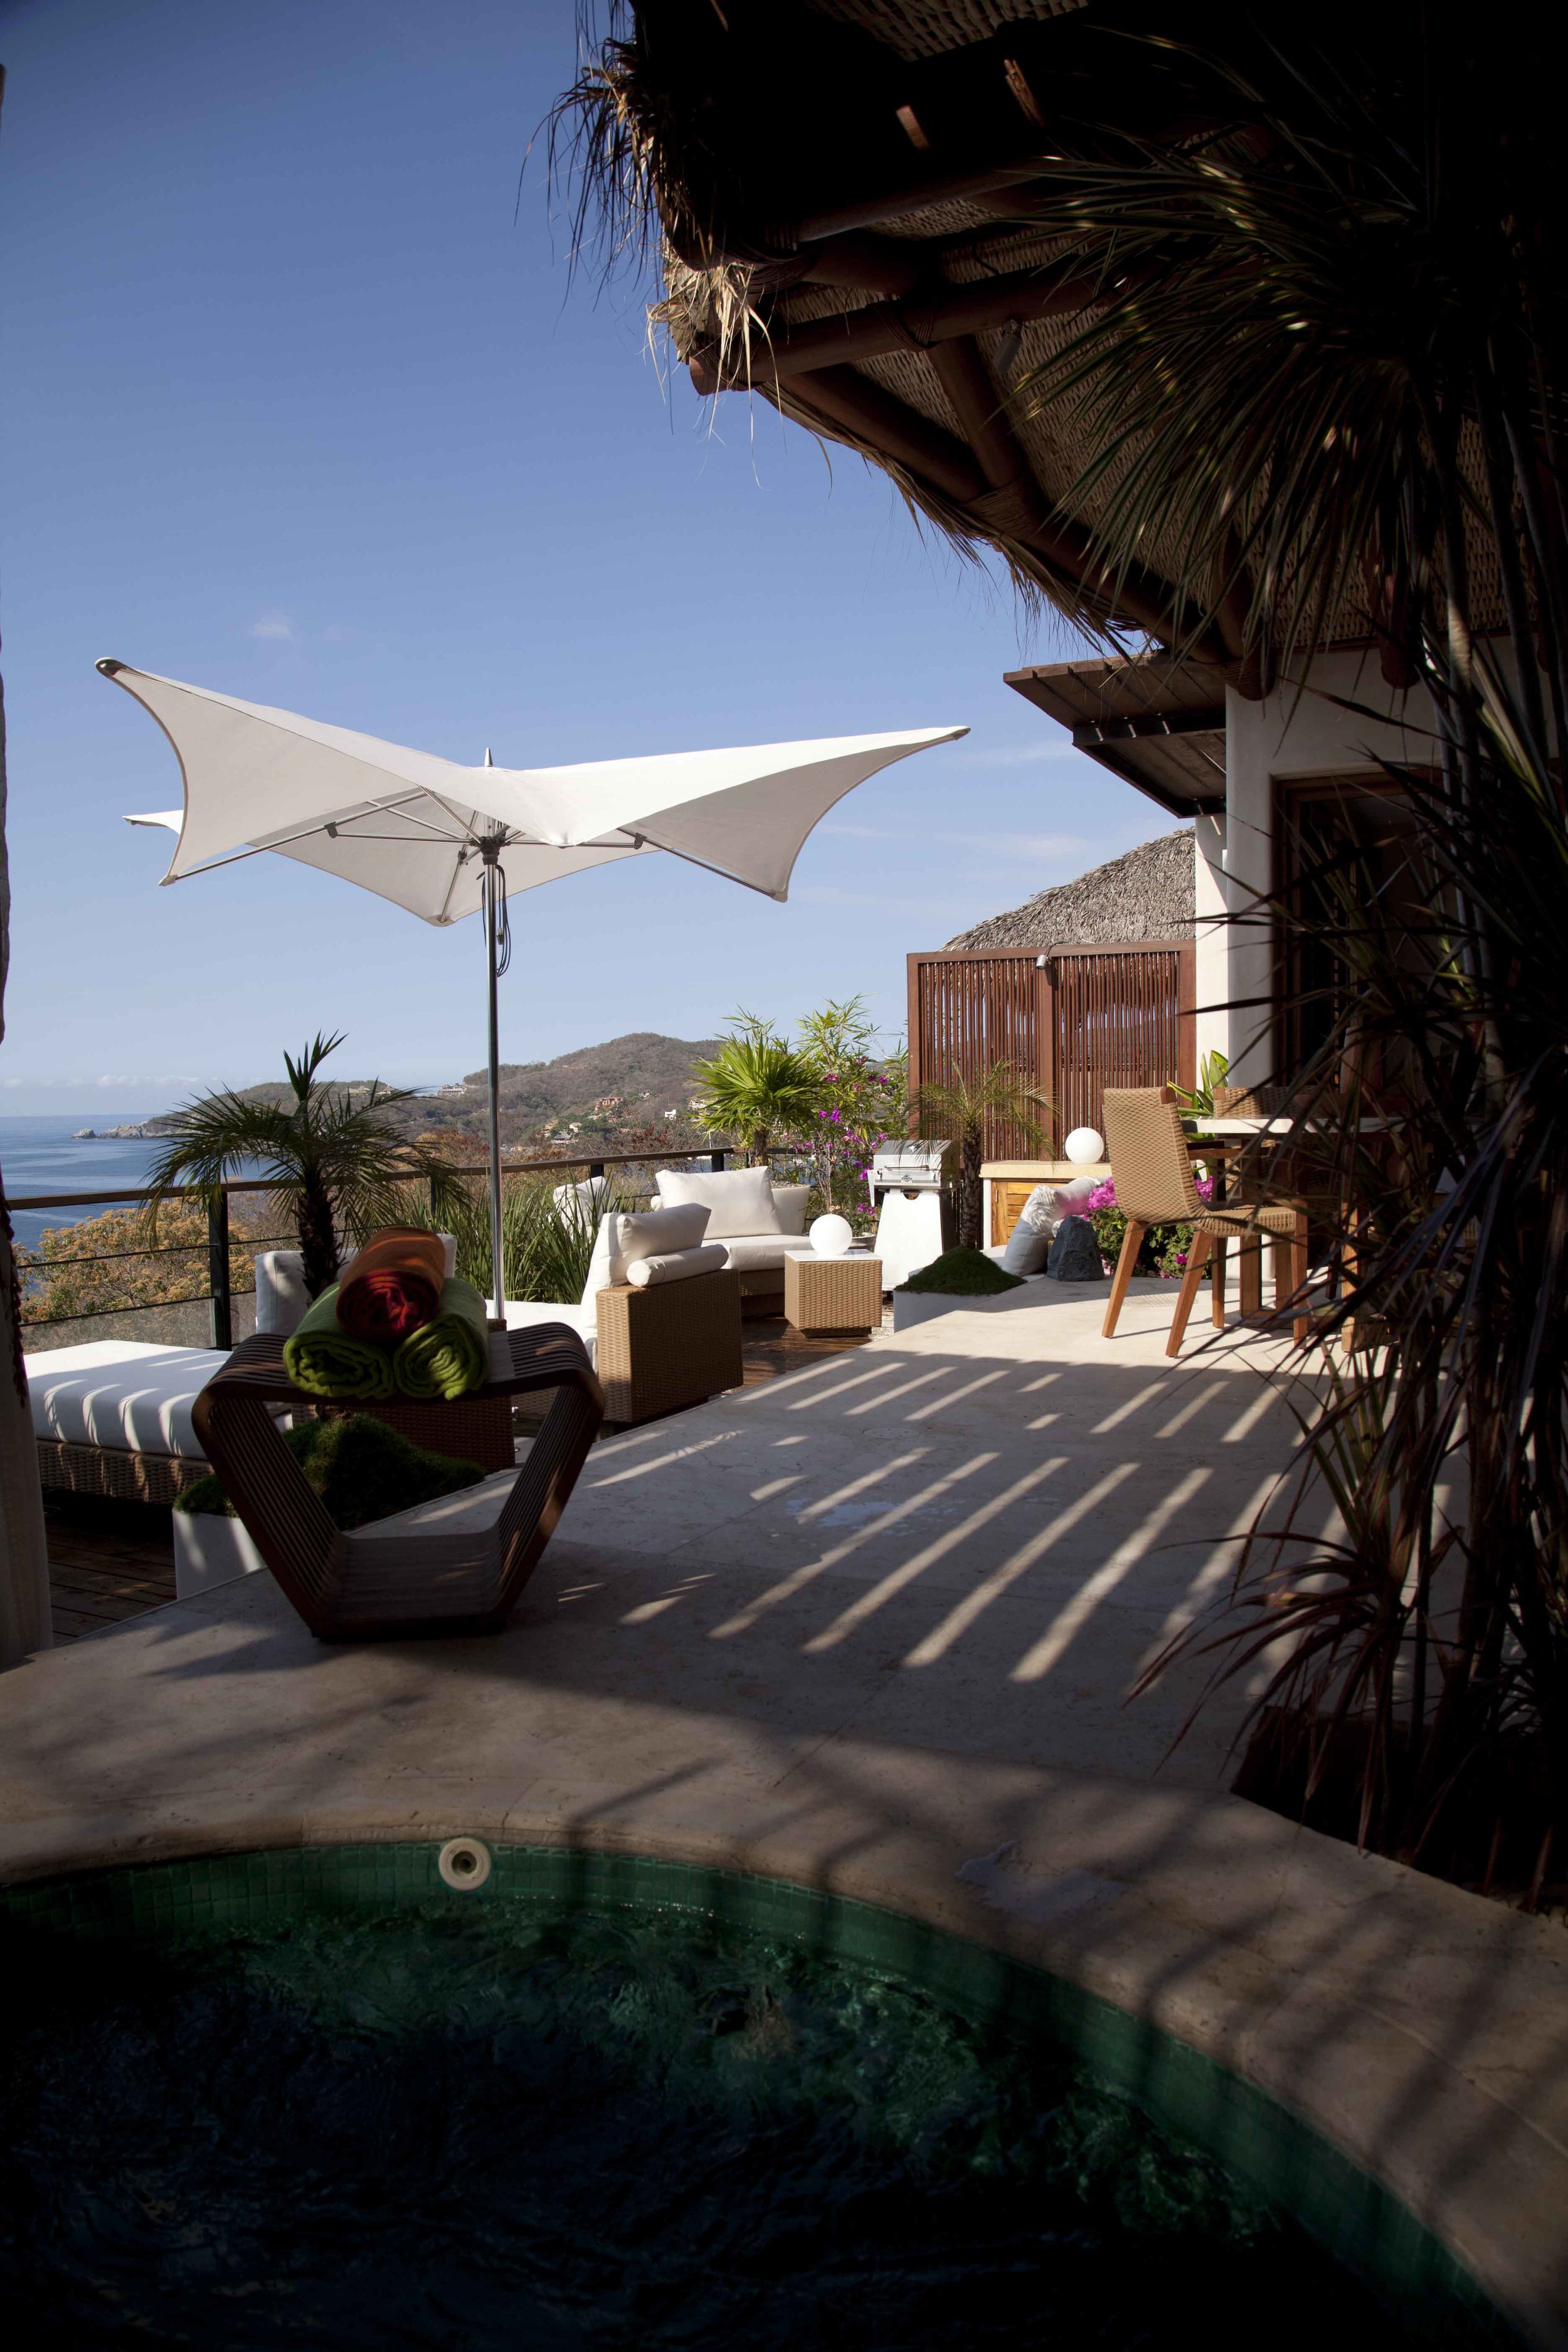 ensueno-casa-1-properties-condos-for-rent-sale-tara-medina-real-estate-zihuatanejo-mexico-ixtapa-full-ocean-view-deck.jpg